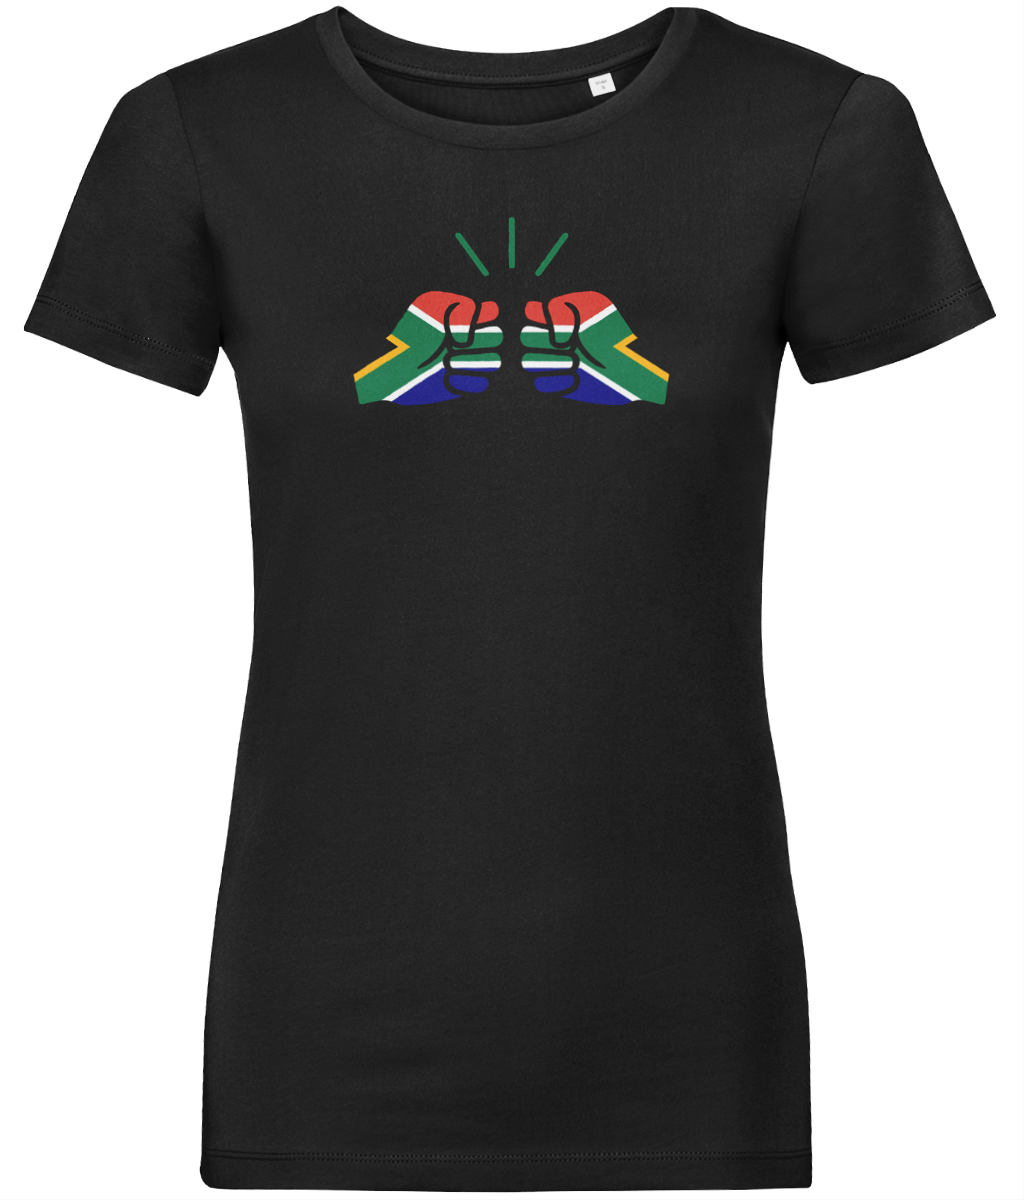 We Run Tings, South Africa, Women's, Organic Ring Spun Cotton, Contemporary Shaped Fit T-Shirt